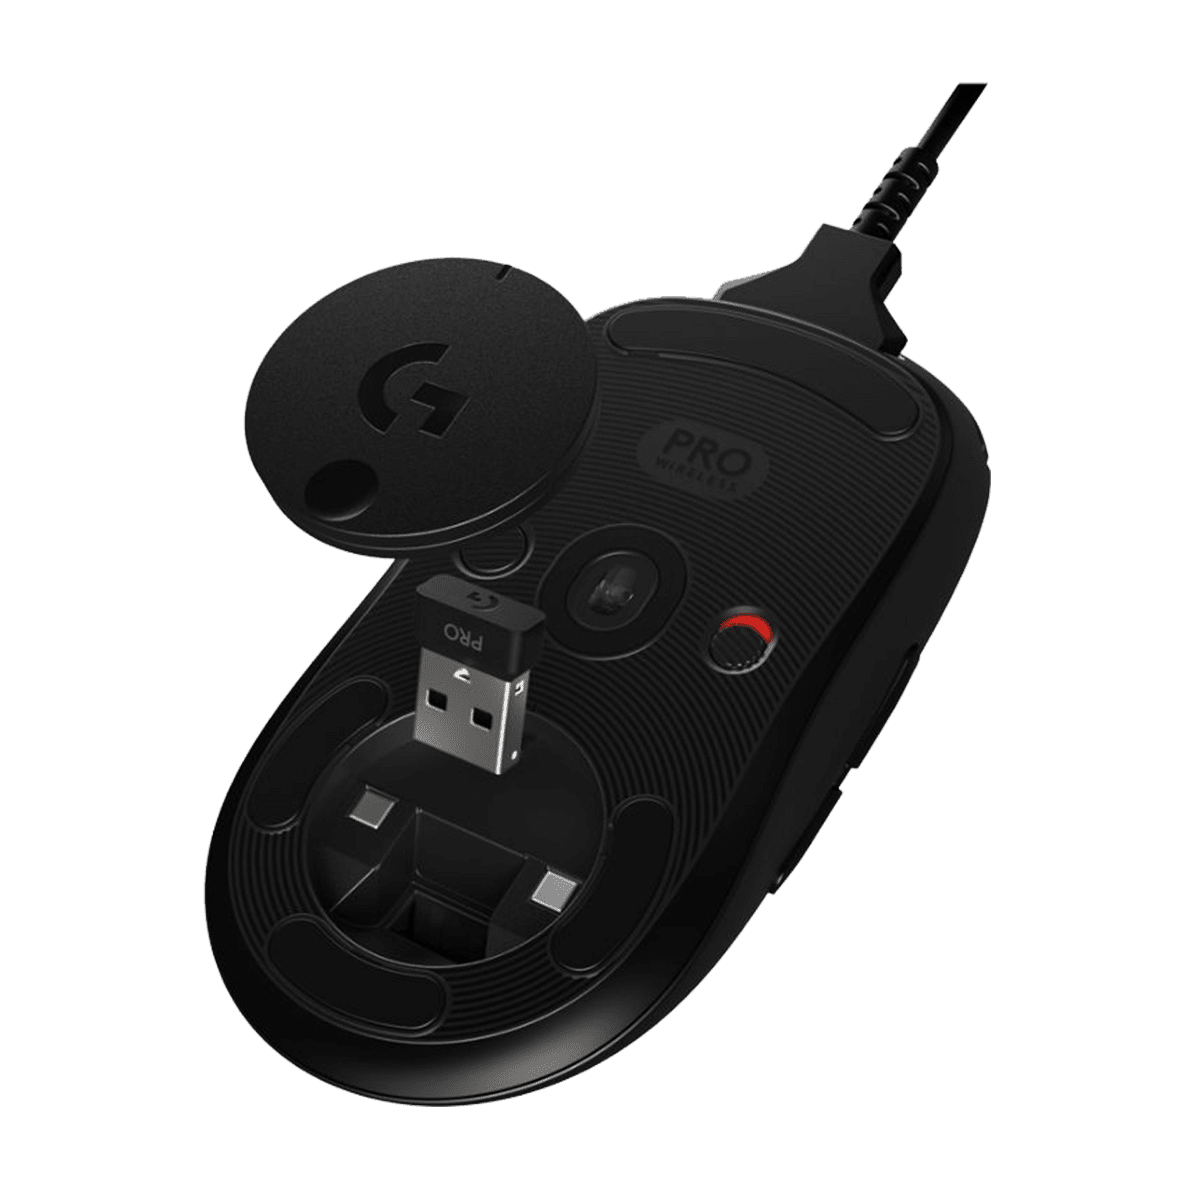 Logitech Pro Wireless Gaming Mouse 